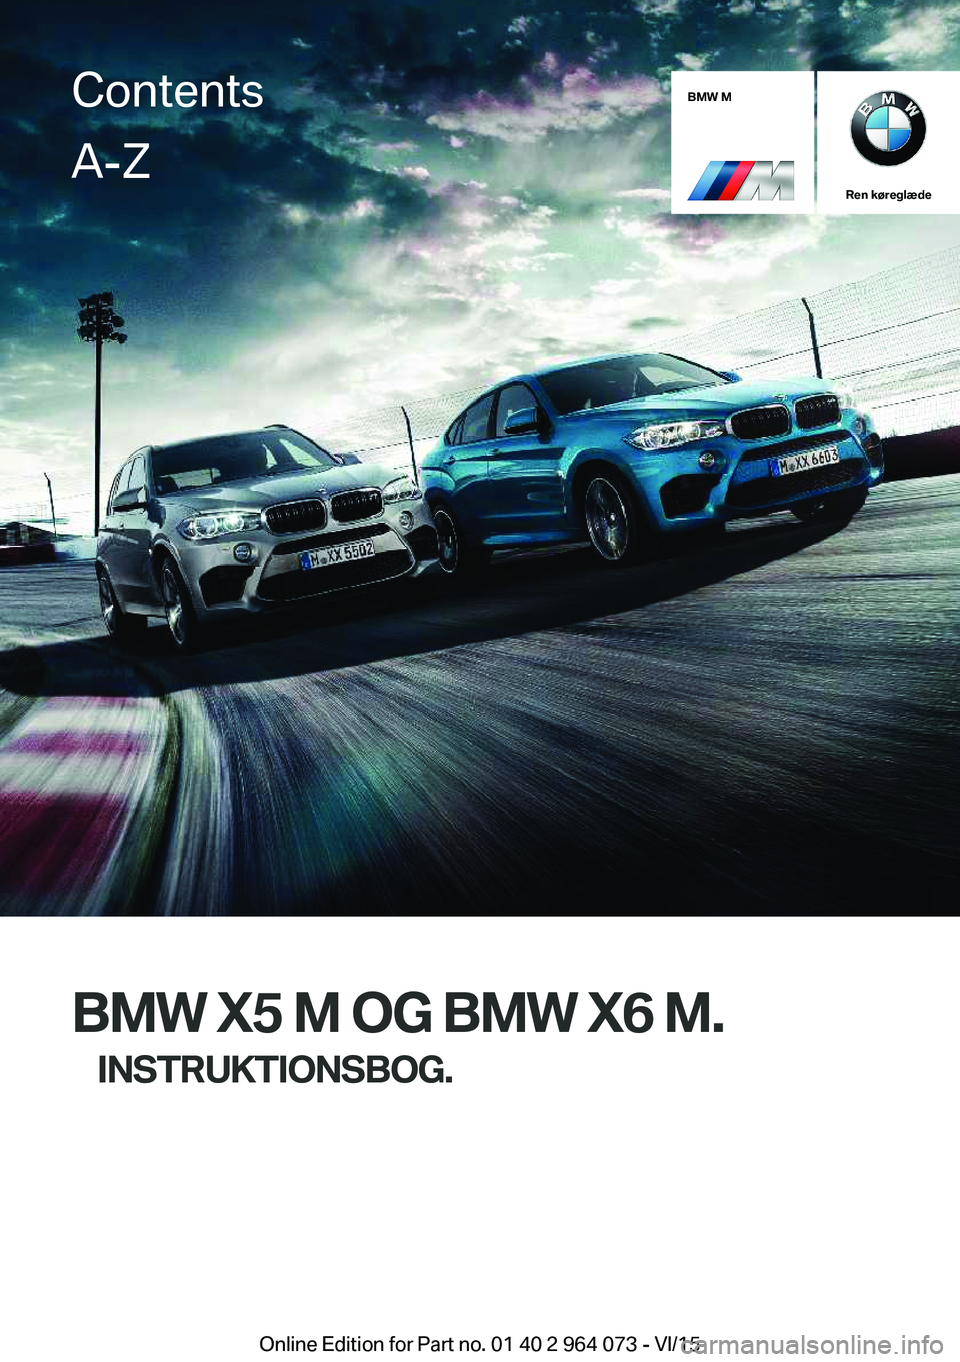 BMW X6 M 2016  InstruktionsbØger (in Danish) BMW M
Ren køreglæde
BMW X5 M OG BMW X6 M.INSTRUKTIONSBOG.
ContentsA-Z
Online Edition for Part no. 01 40 2 964 073 - VI/15   